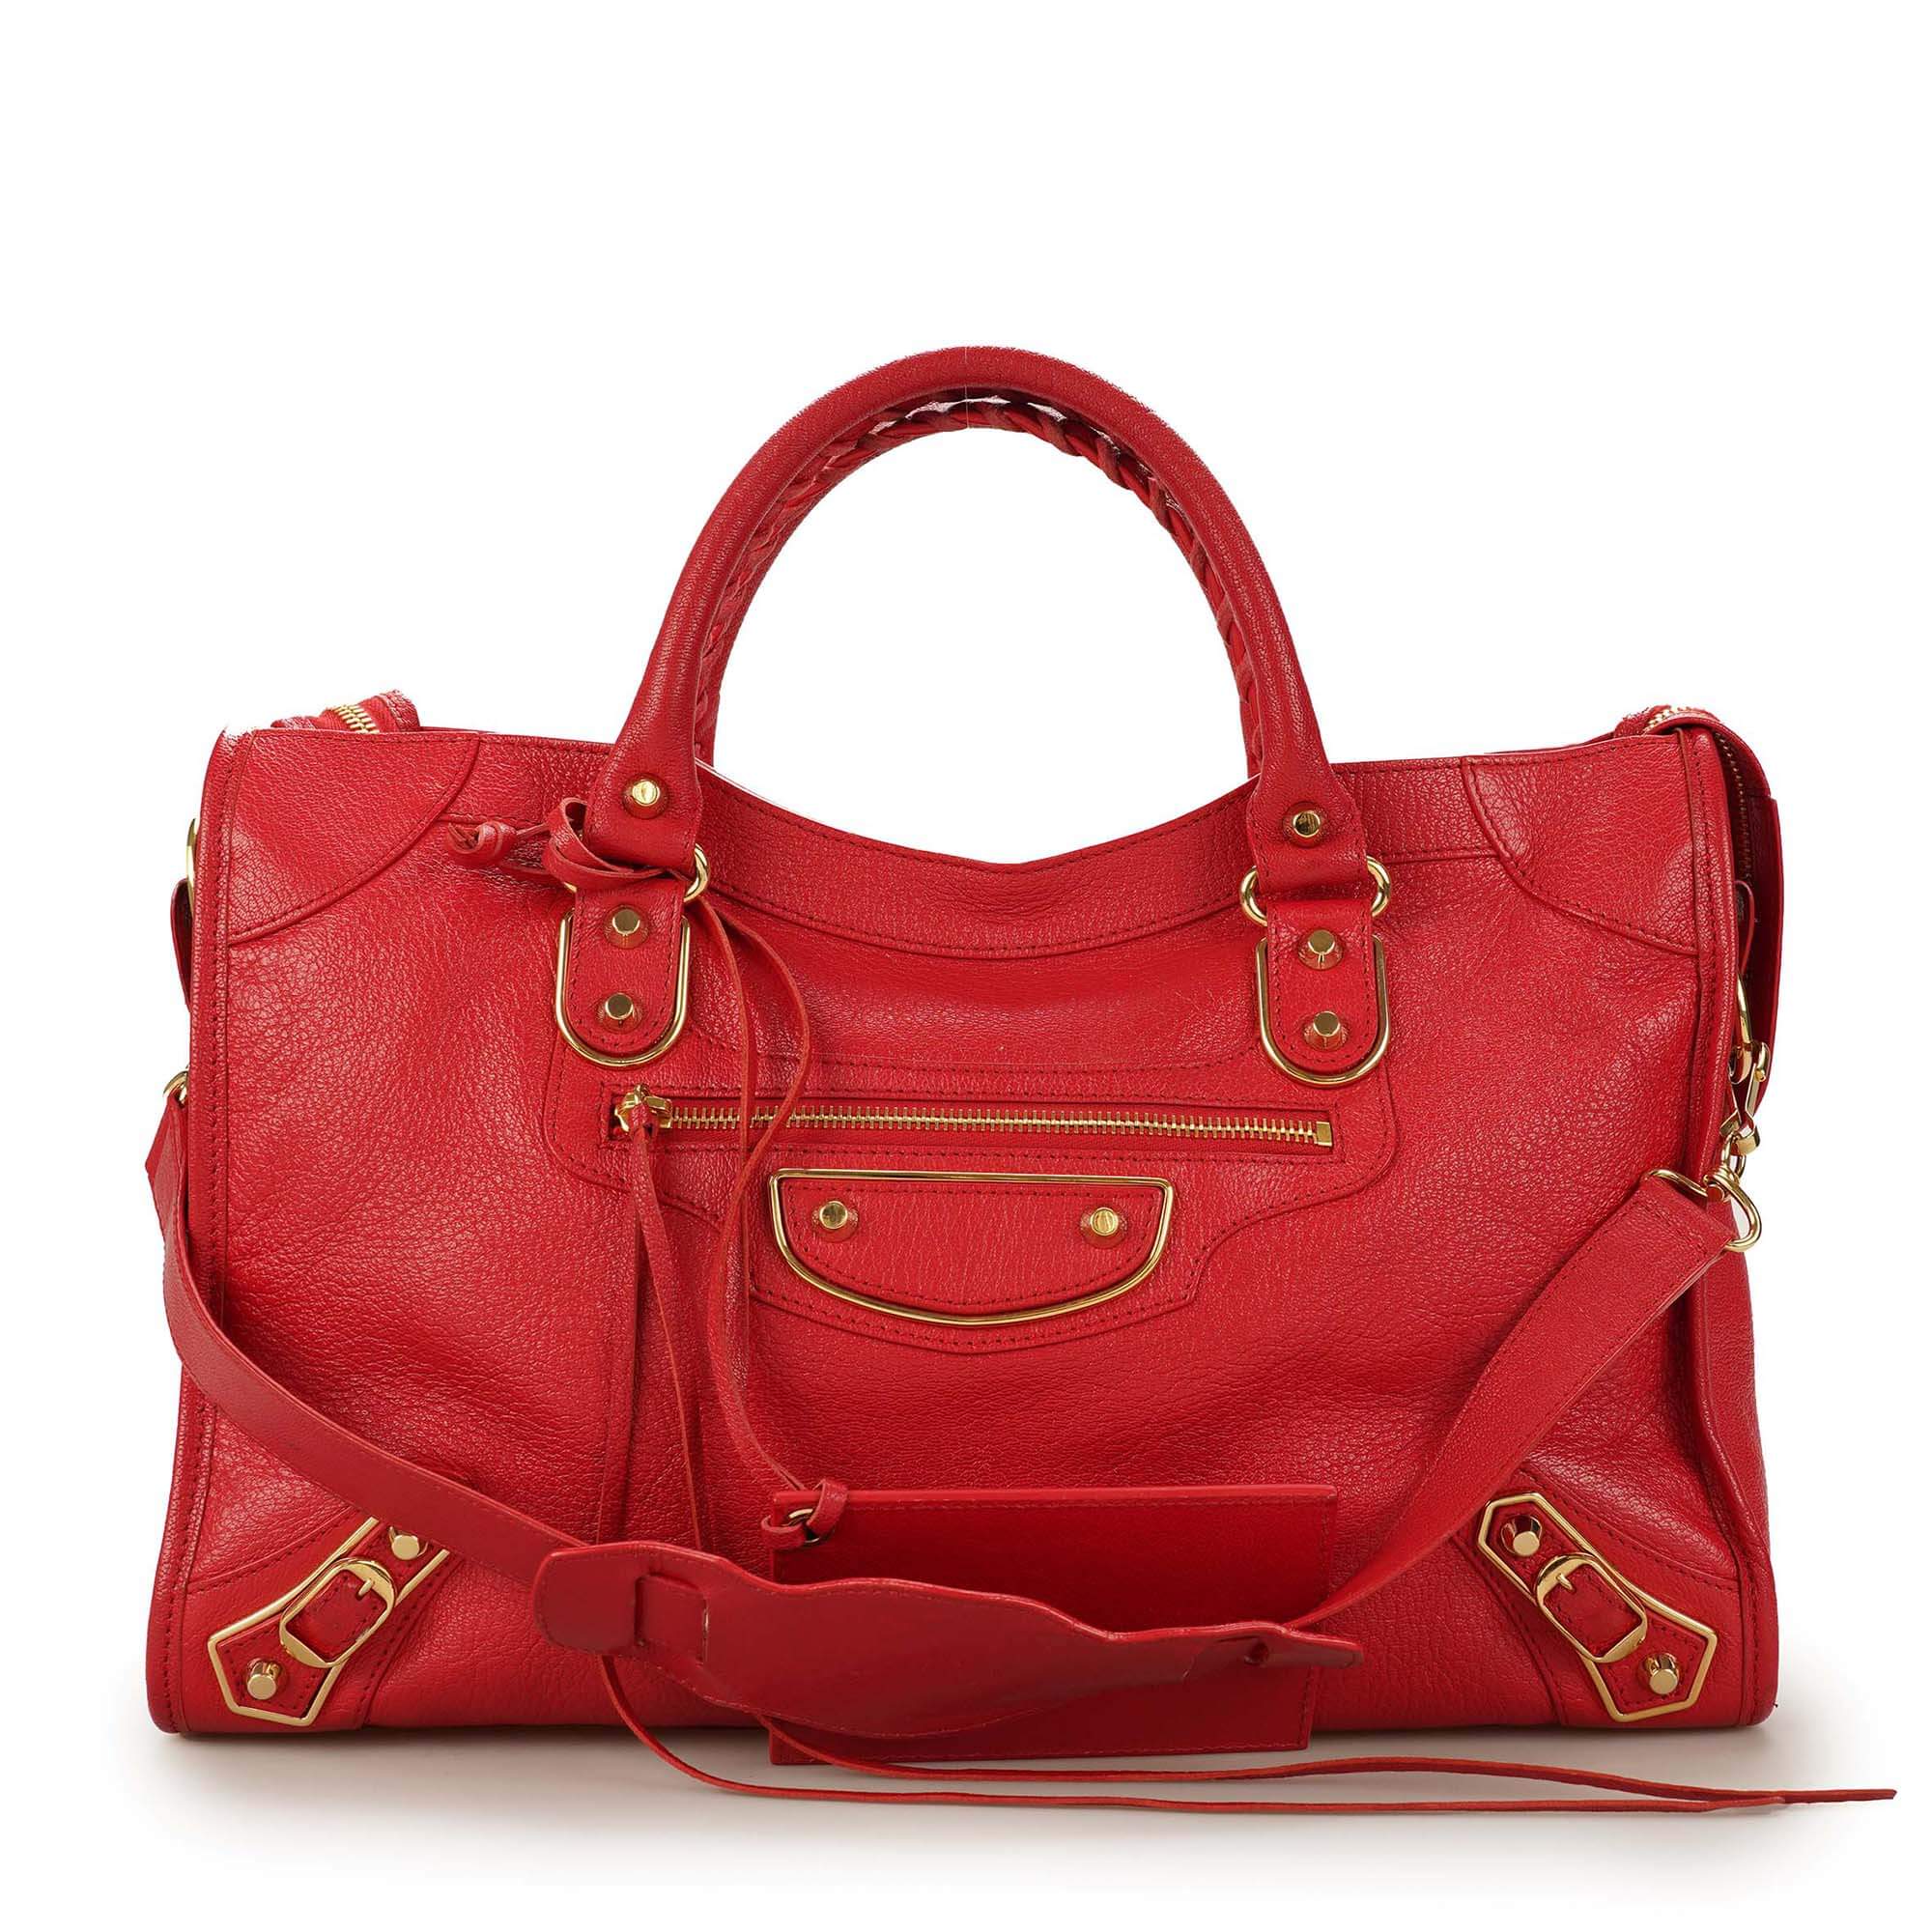 Balenciaga - Red Calfskin Leather Medium City Bag 